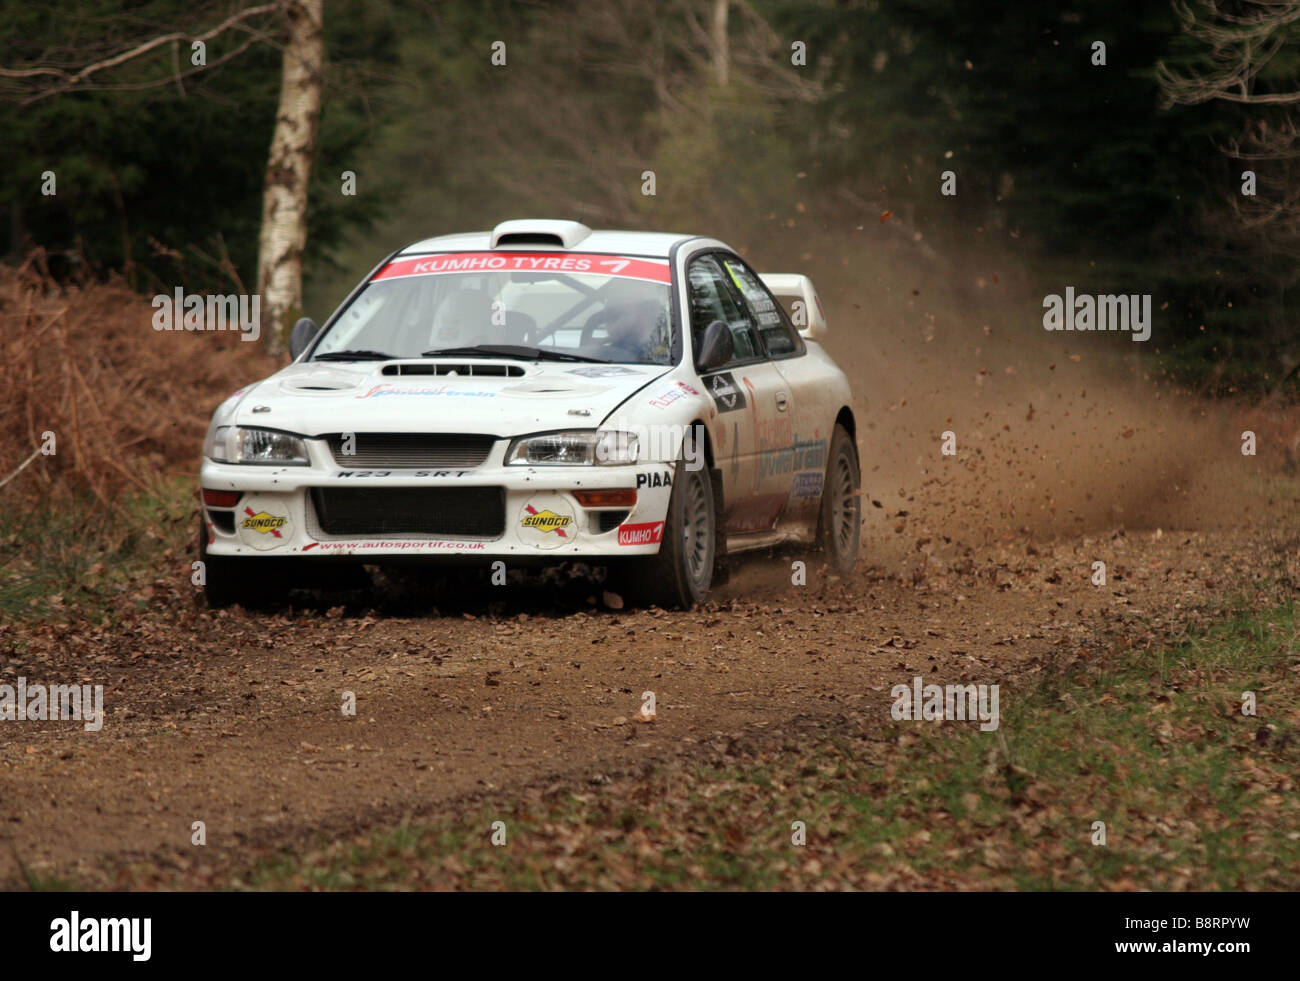 Lauffeuer der Rallye Auto Proforming Rallye Sunseeker 2009 Stockfoto